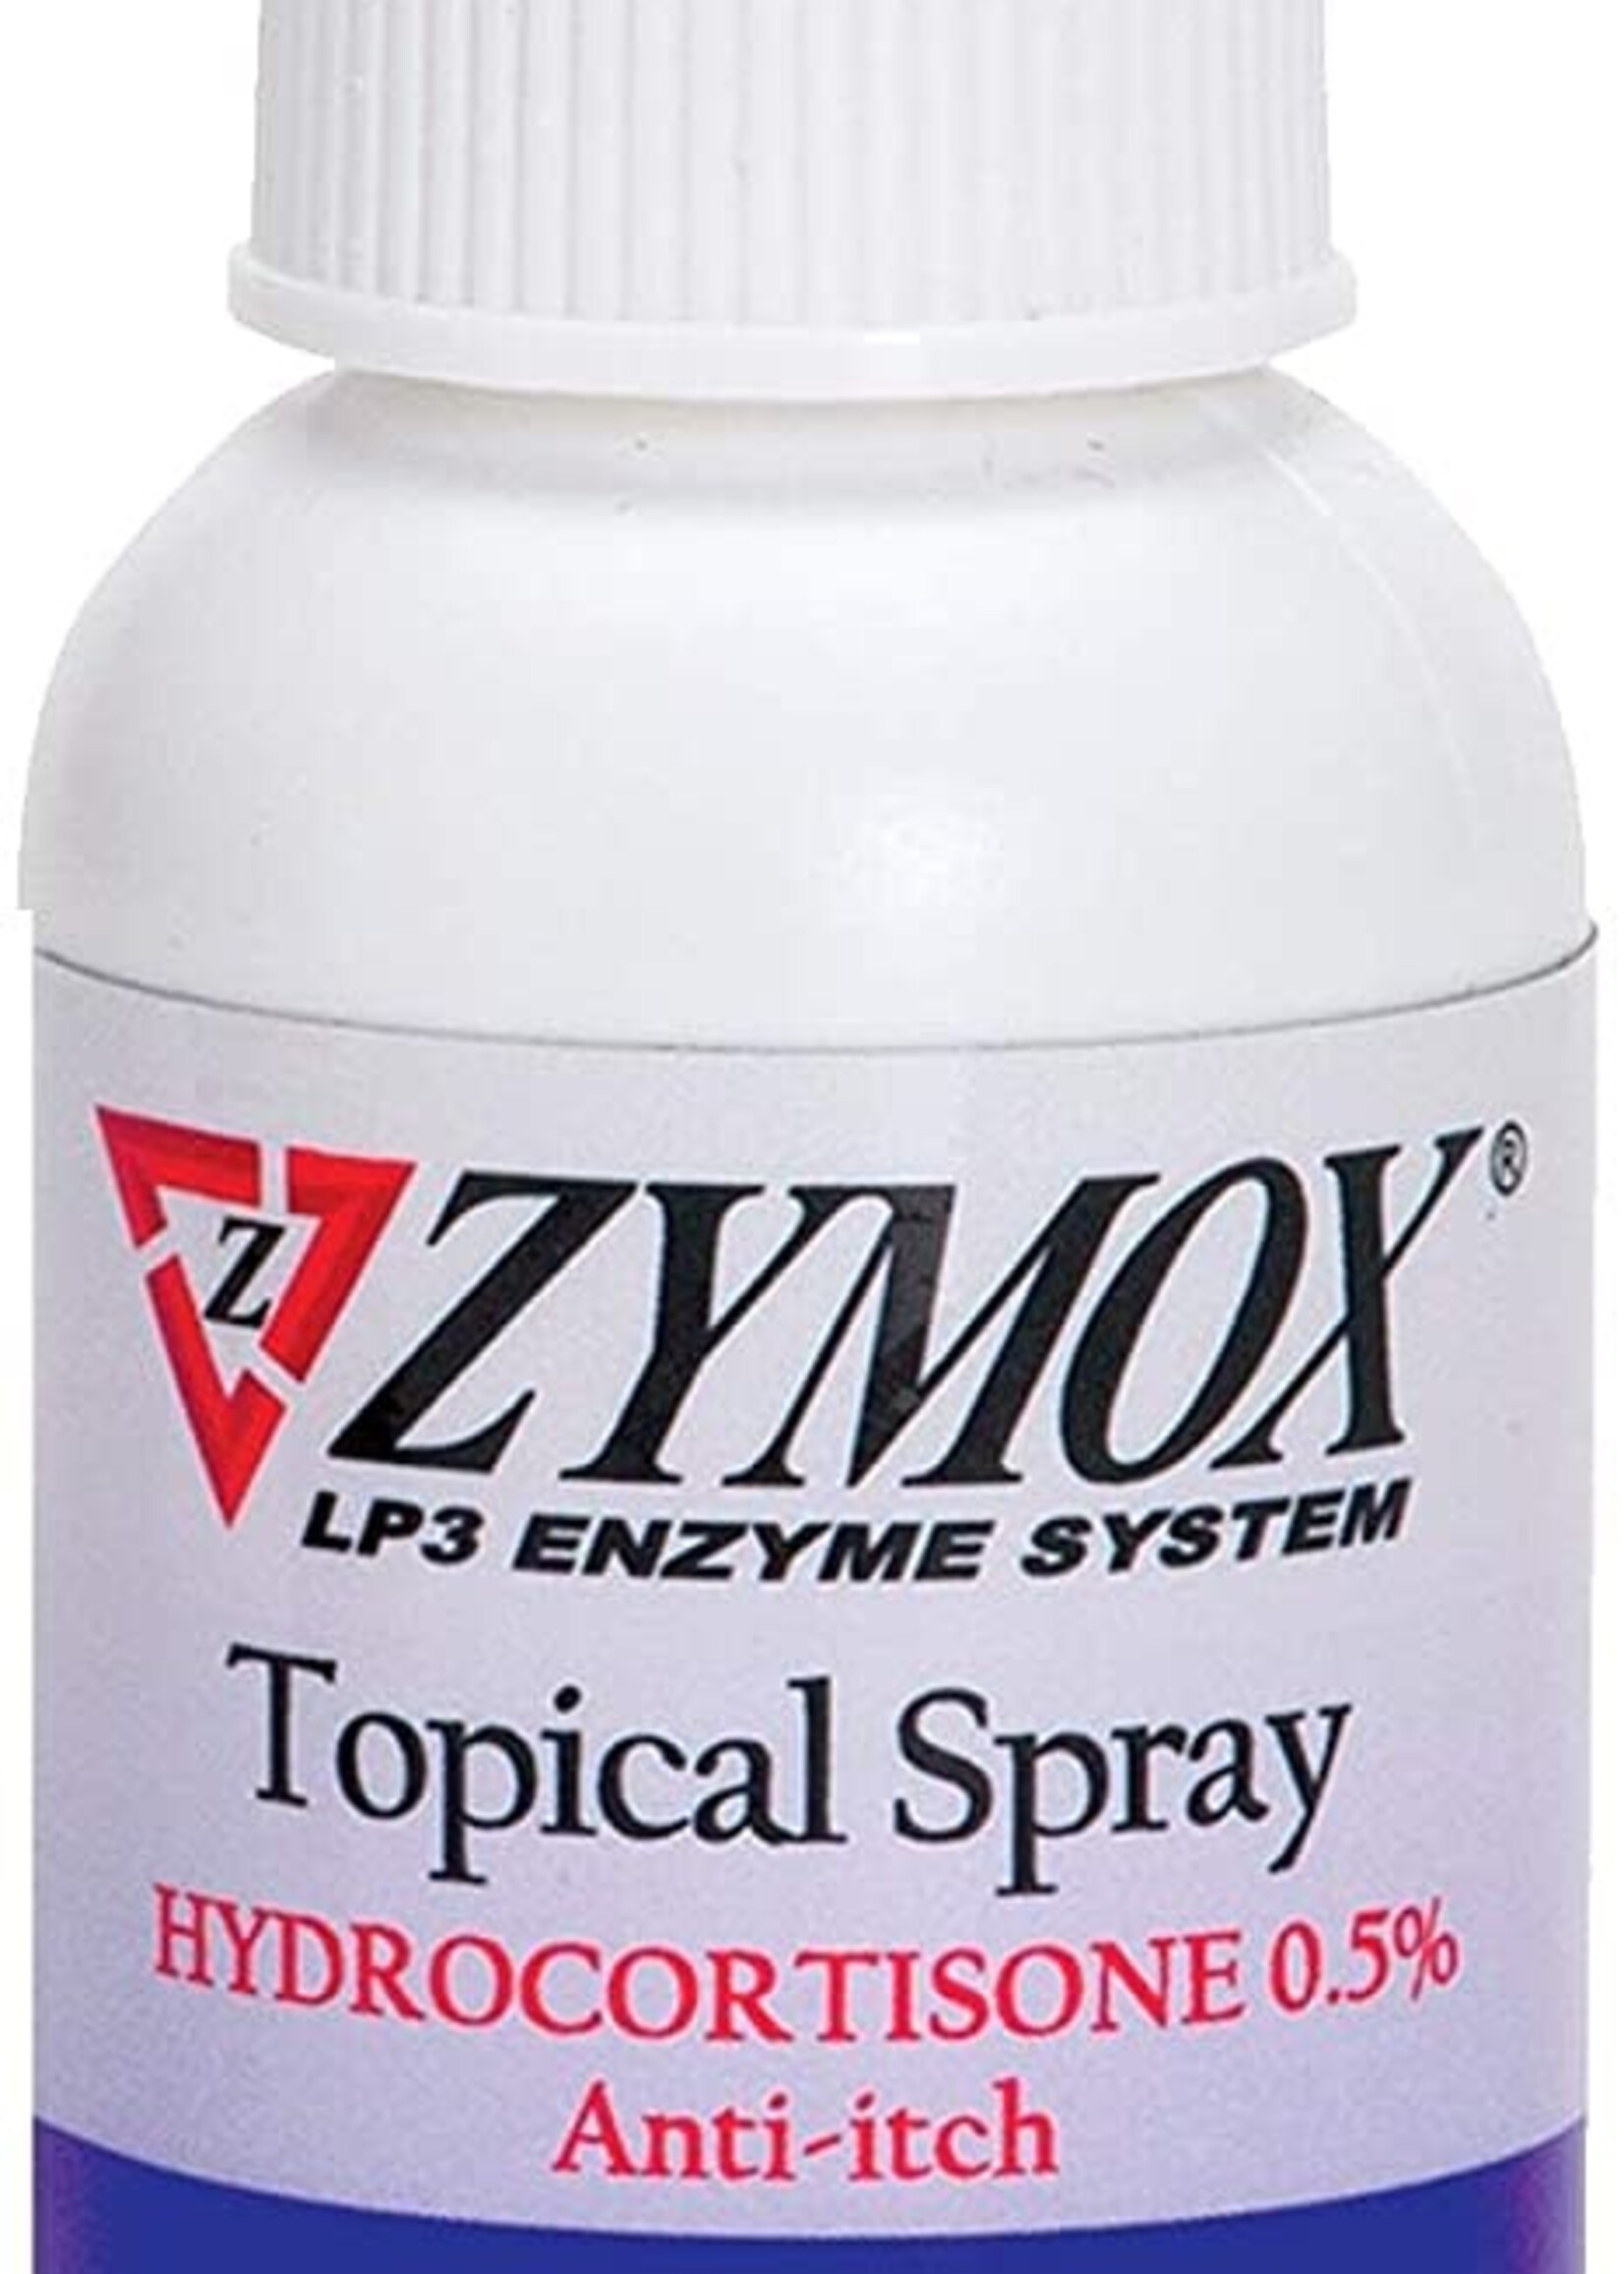 ZYMOX LP3 ENZYME SYSTEM Zymox Ear Solution 1.25 oz  Bottle  .5% Hydrocortisone